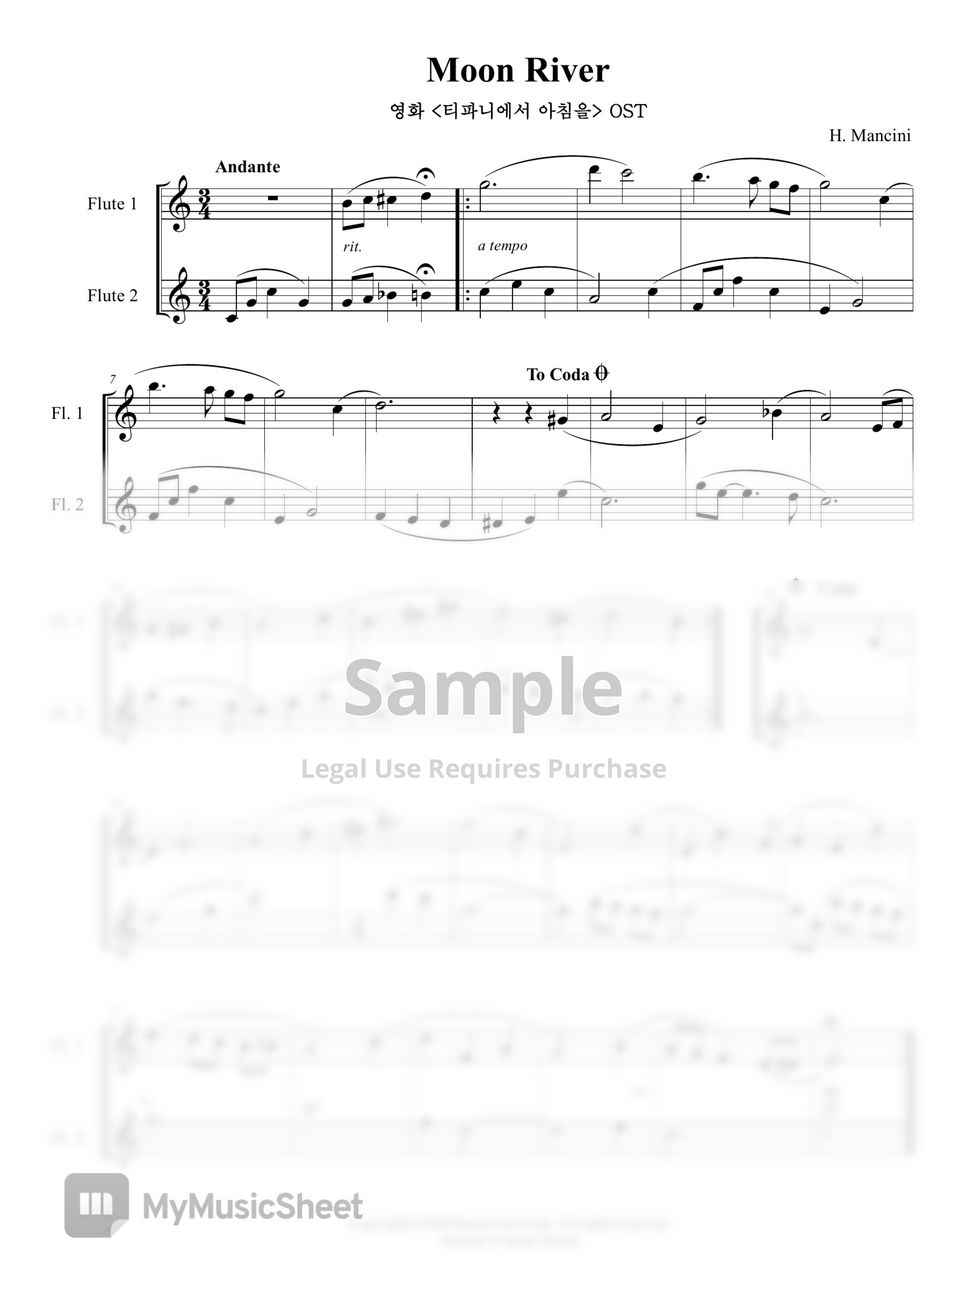 H. Mancini - Moon River 문리버 (플루트 듀엣, Flute Duet) by 바론아트